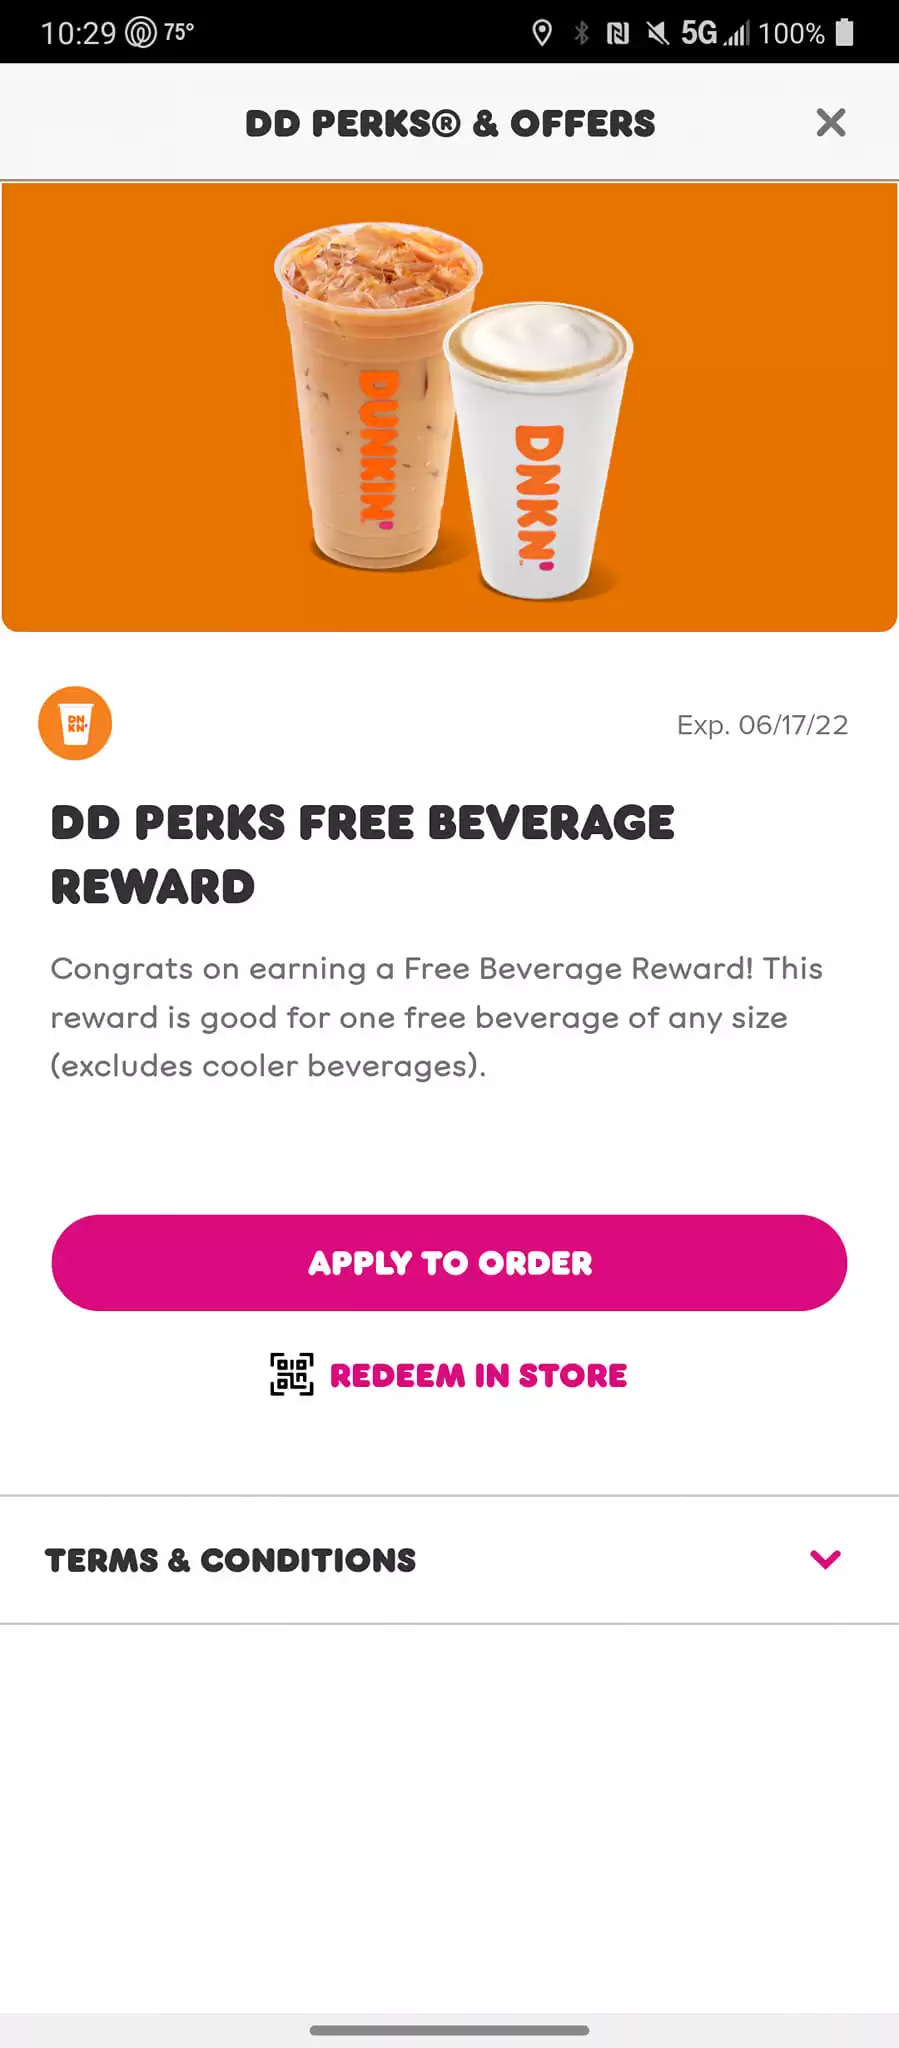 DD Perks Free Beverage Reward